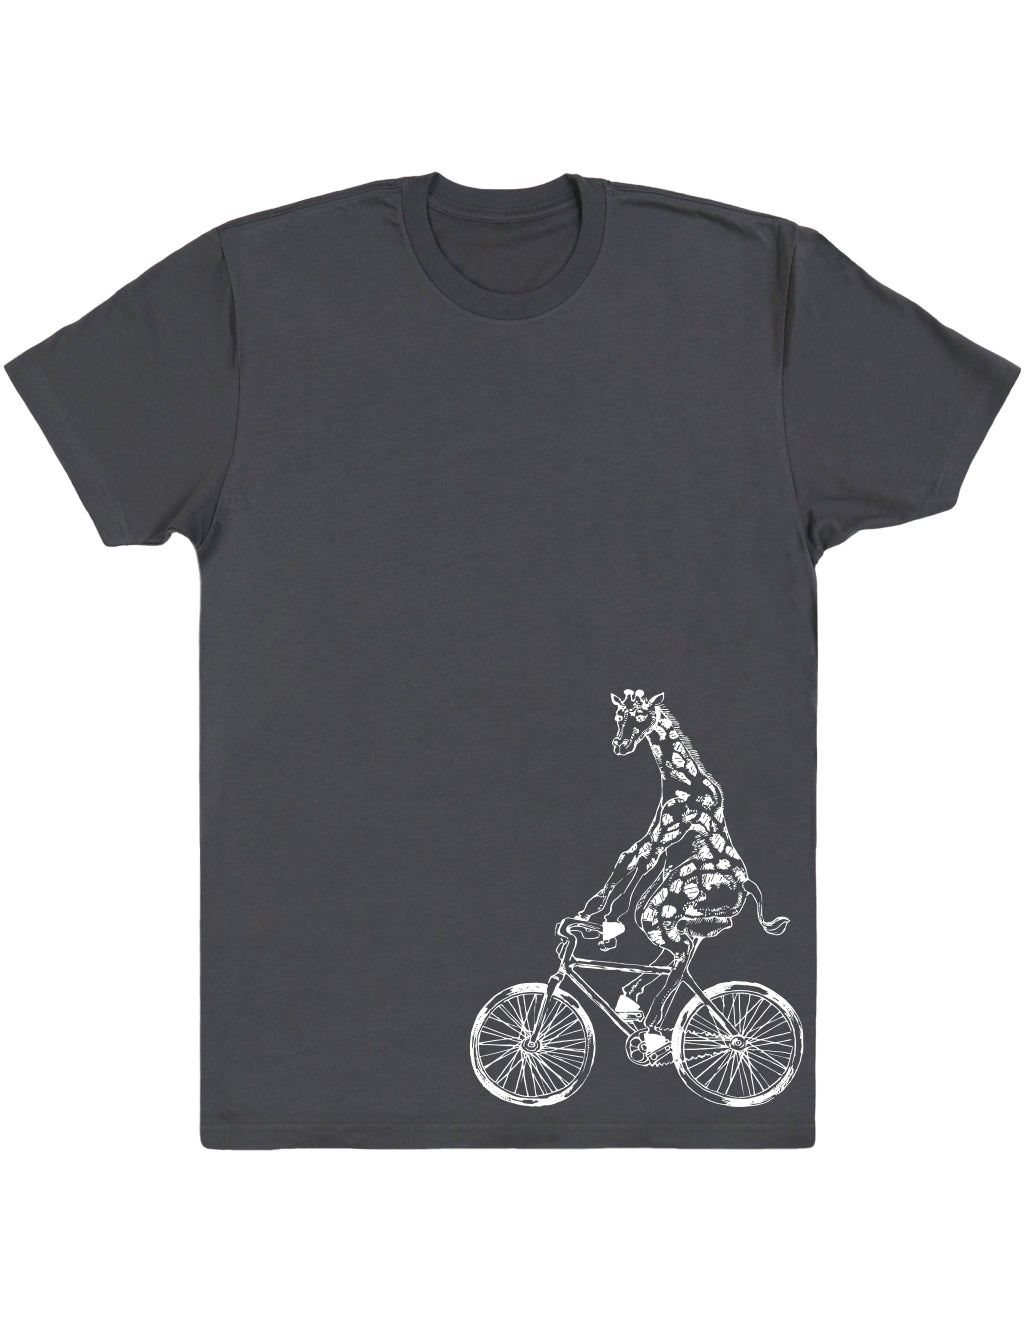 SEEMBO Giraffe Cycling Bicycle Men's Cotton T-Shirt Side Print